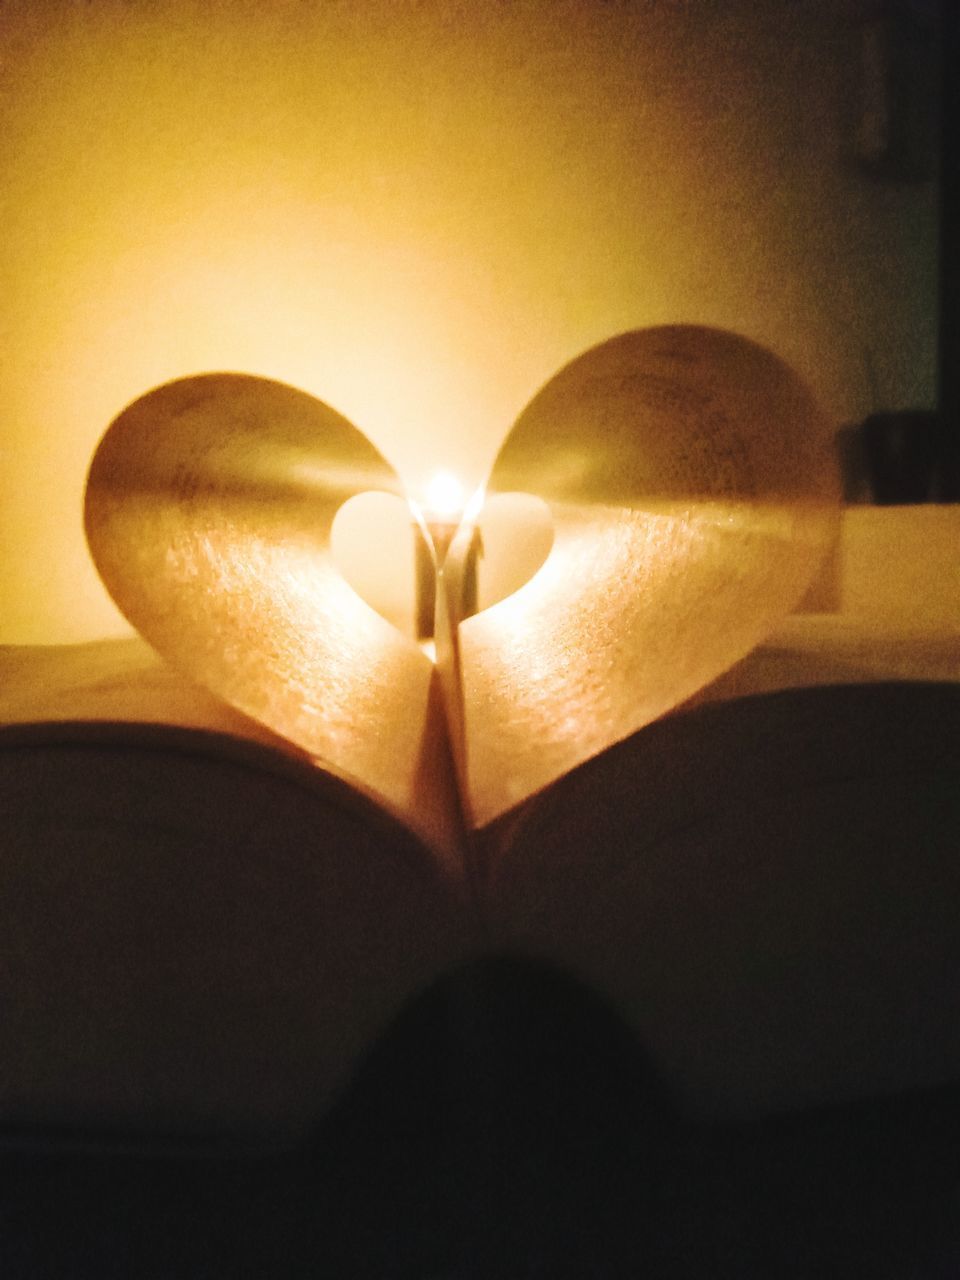 CLOSE-UP OF HEART SHAPE ON BOOK AT ILLUMINATED ROOM